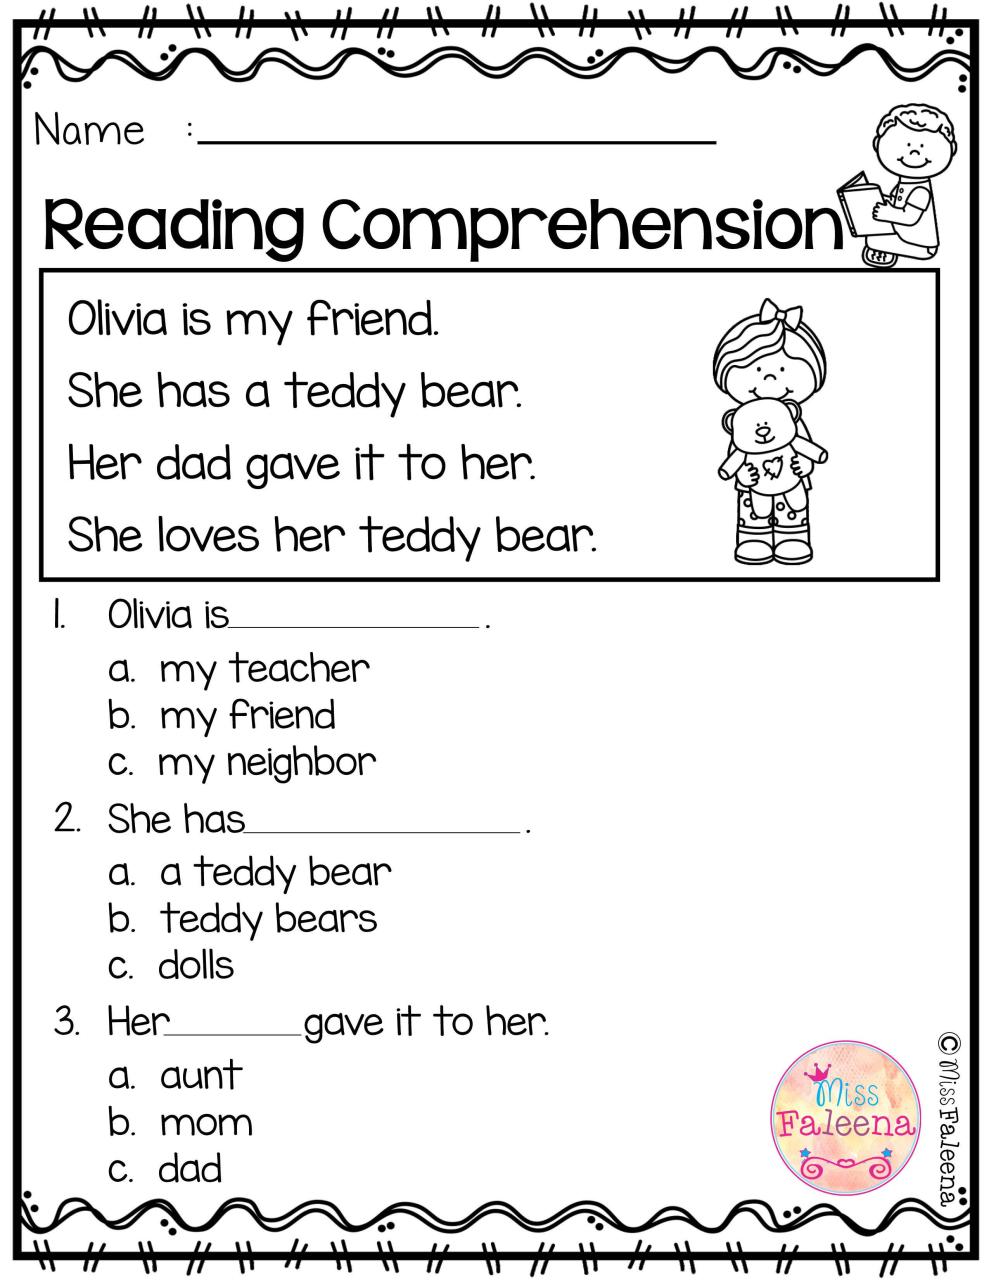 Free Reading Comprehension is suitable for Kindergarten stu… Reading